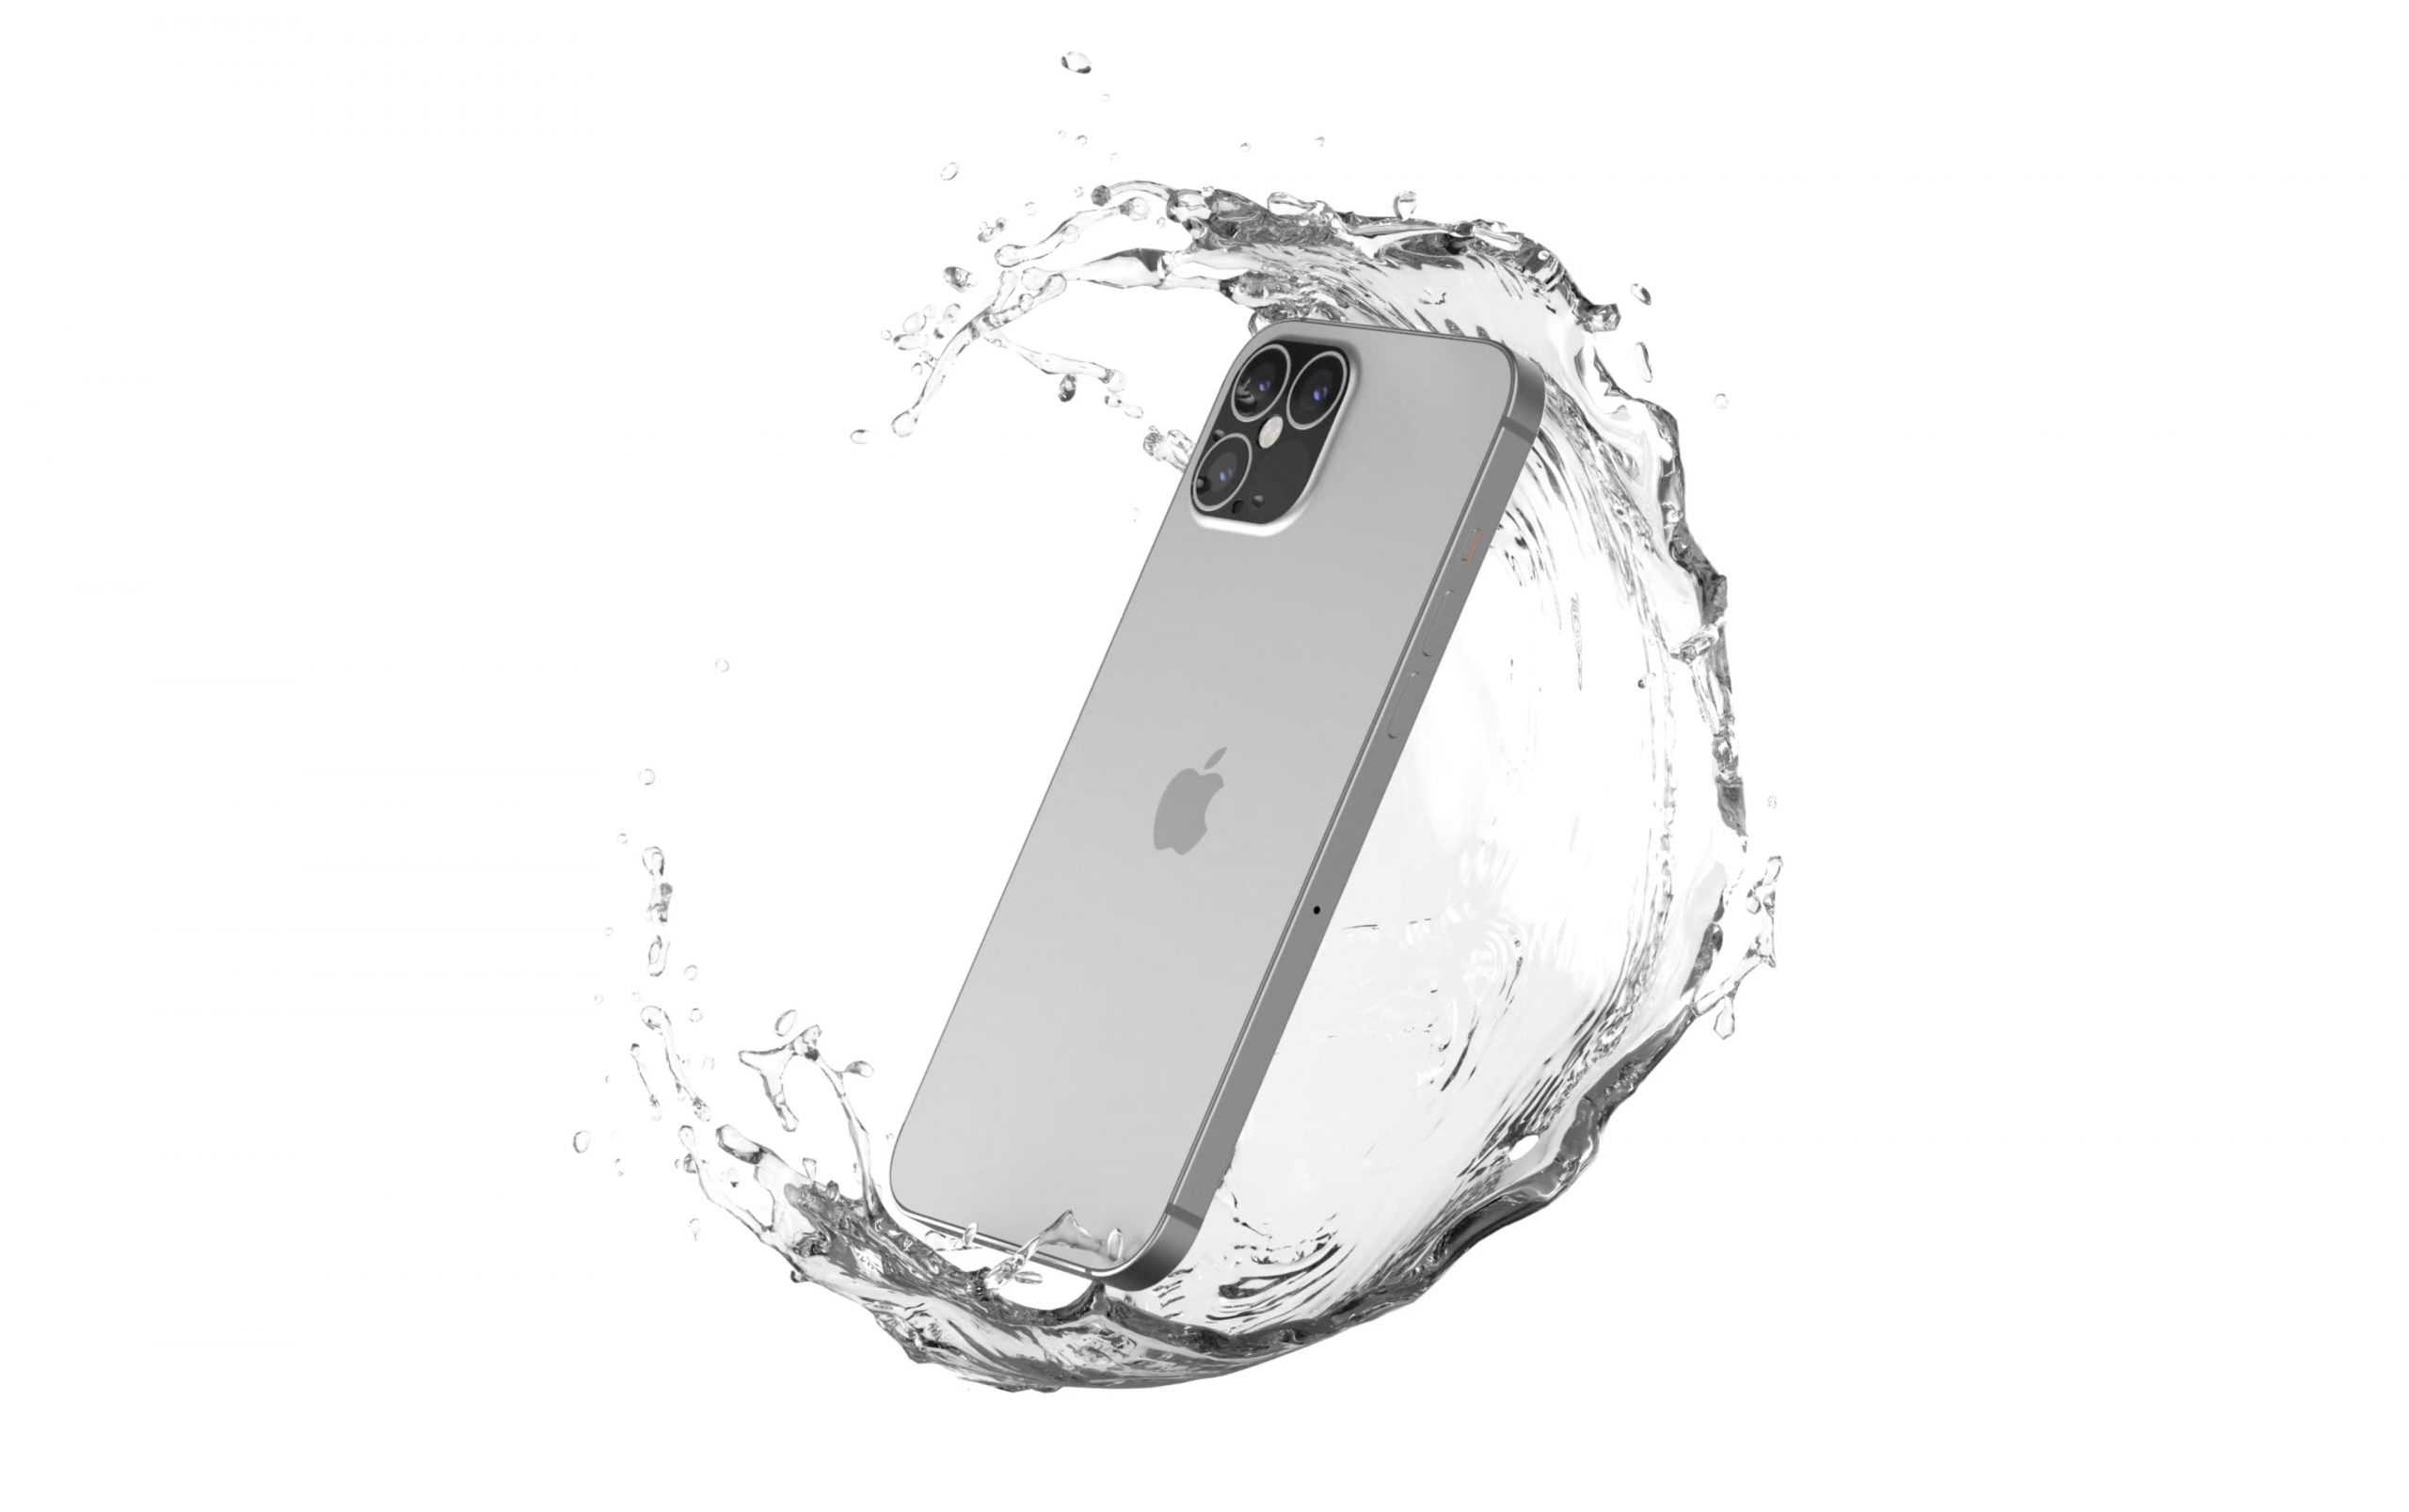 iPhone 12 Pro Max Leaked Design